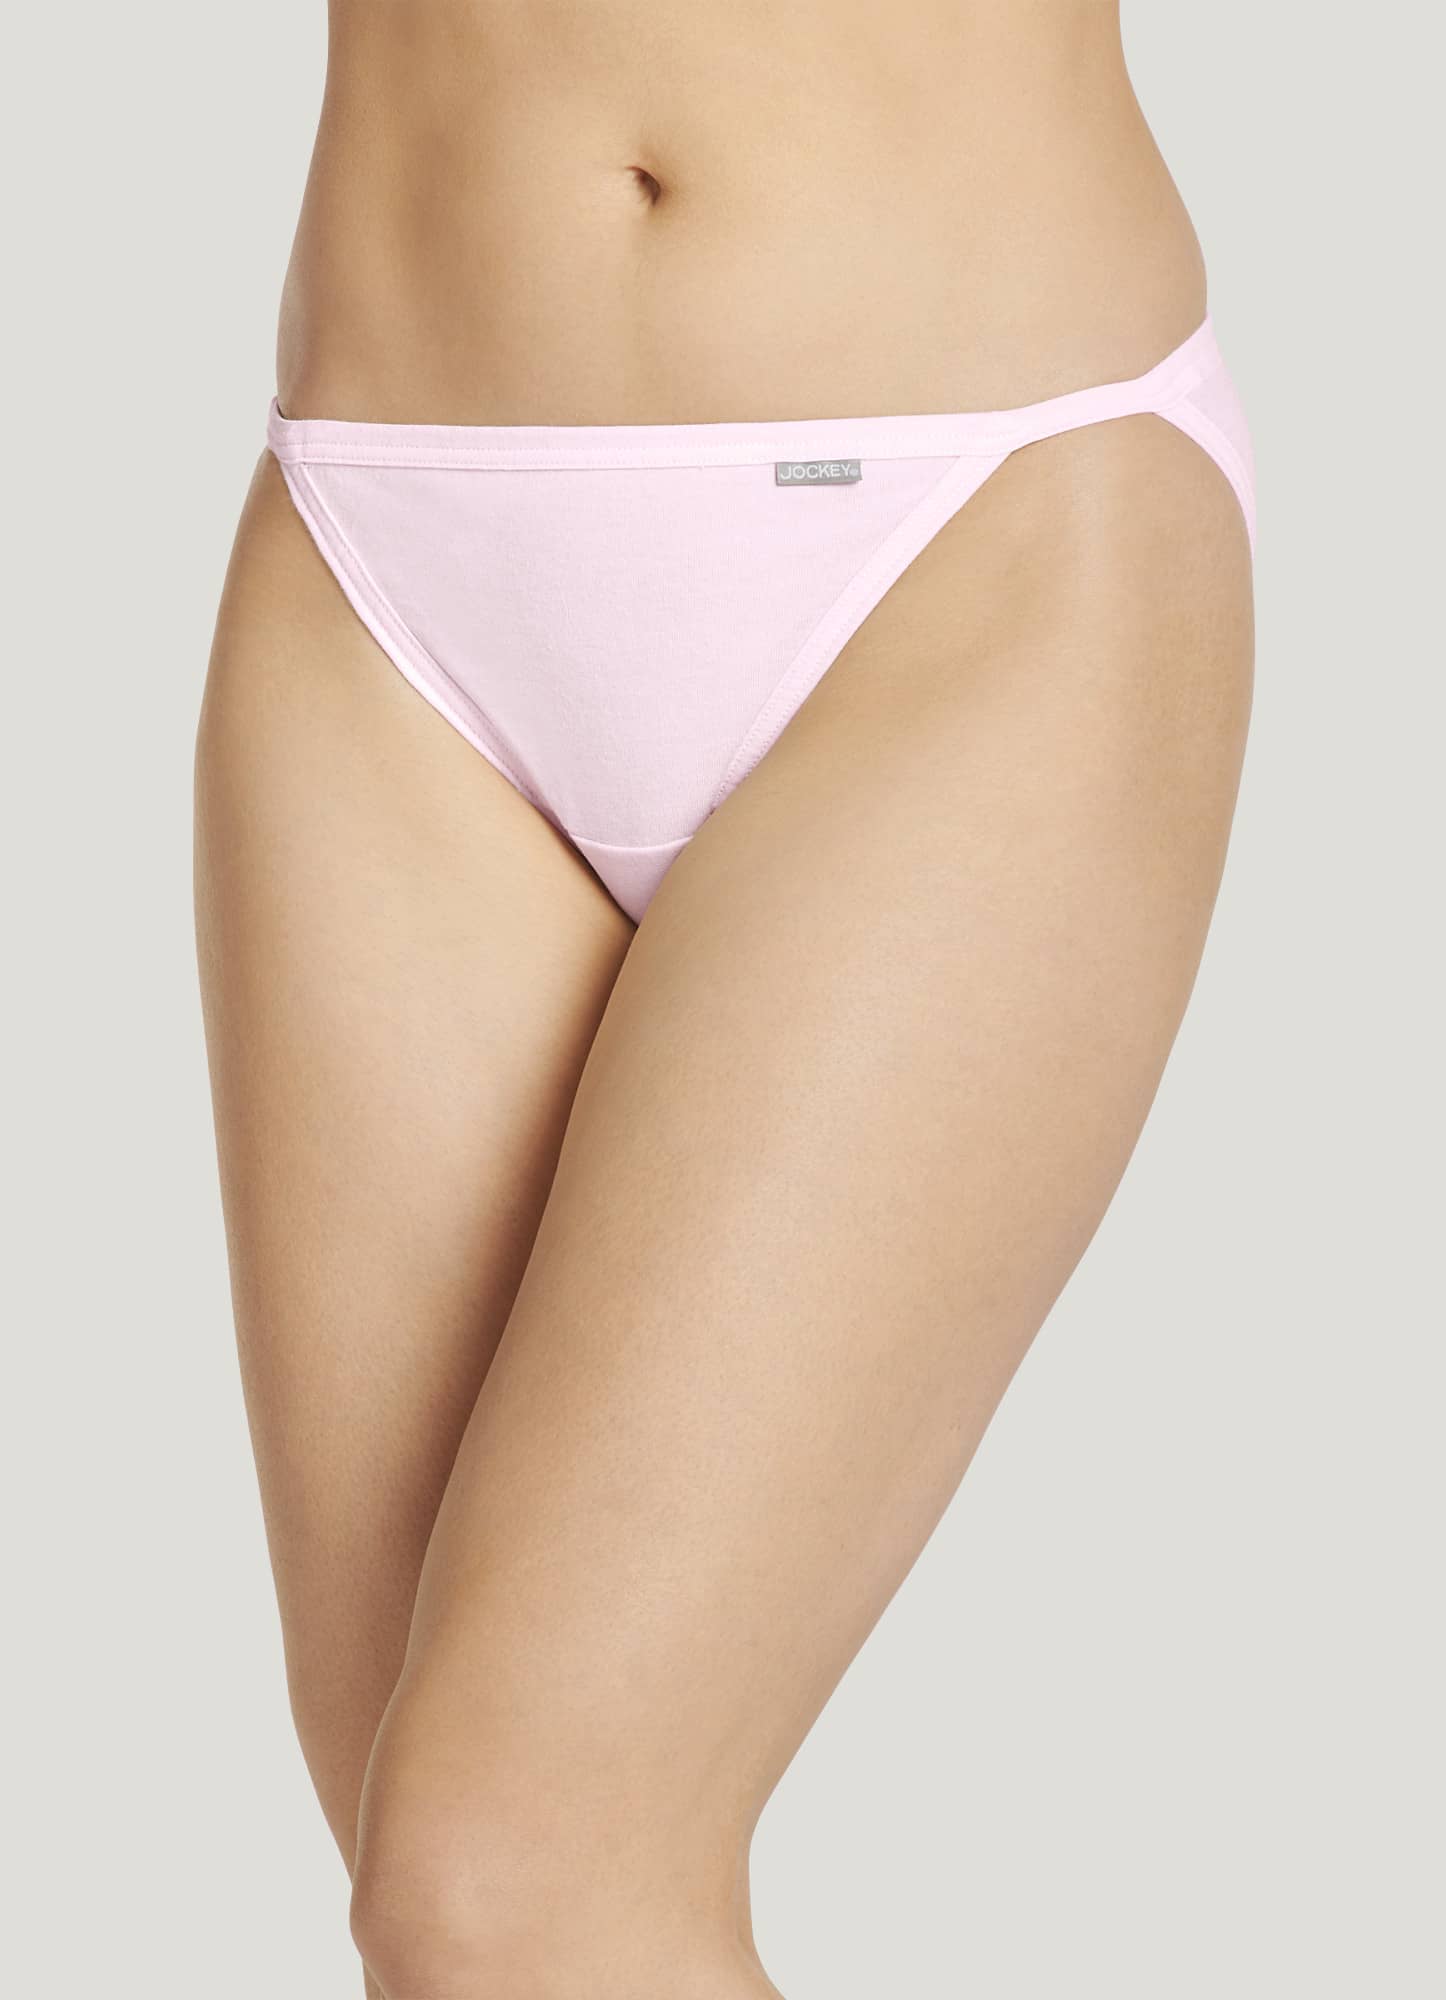 Jockey Women's Underwear Elance Brief - 6 Pack, Ivory/Light/Pink Shadow, 7  at  Women's Clothing store